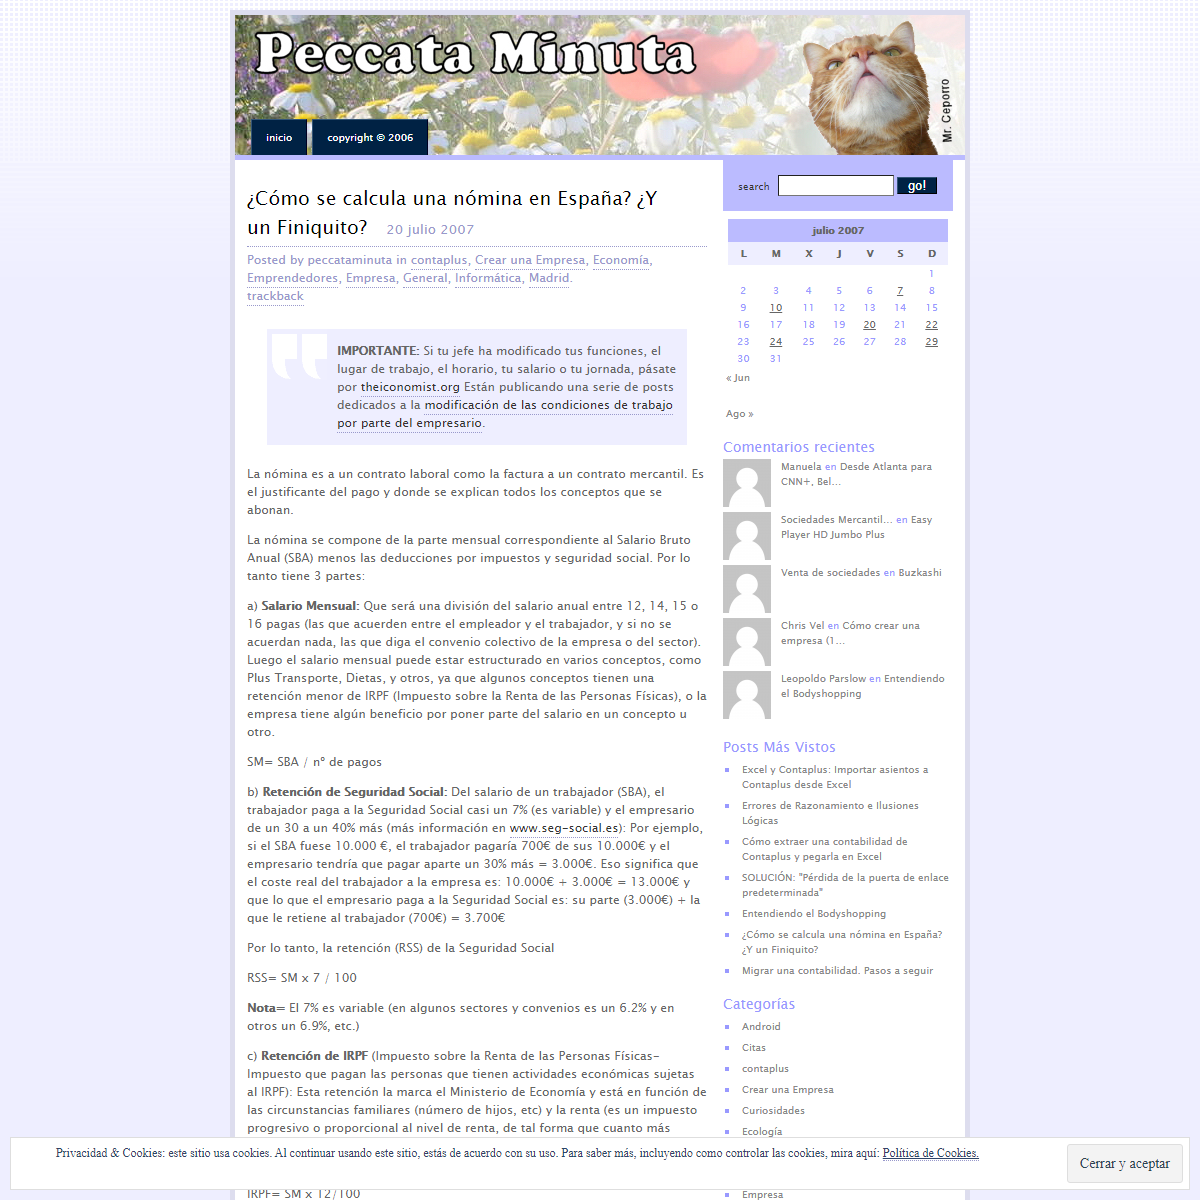 A complete backup of https://peccataminuta.wordpress.com/2007/07/20/cmo-se-calcula-una-nmina-en-espaa-y-un-finiquito/